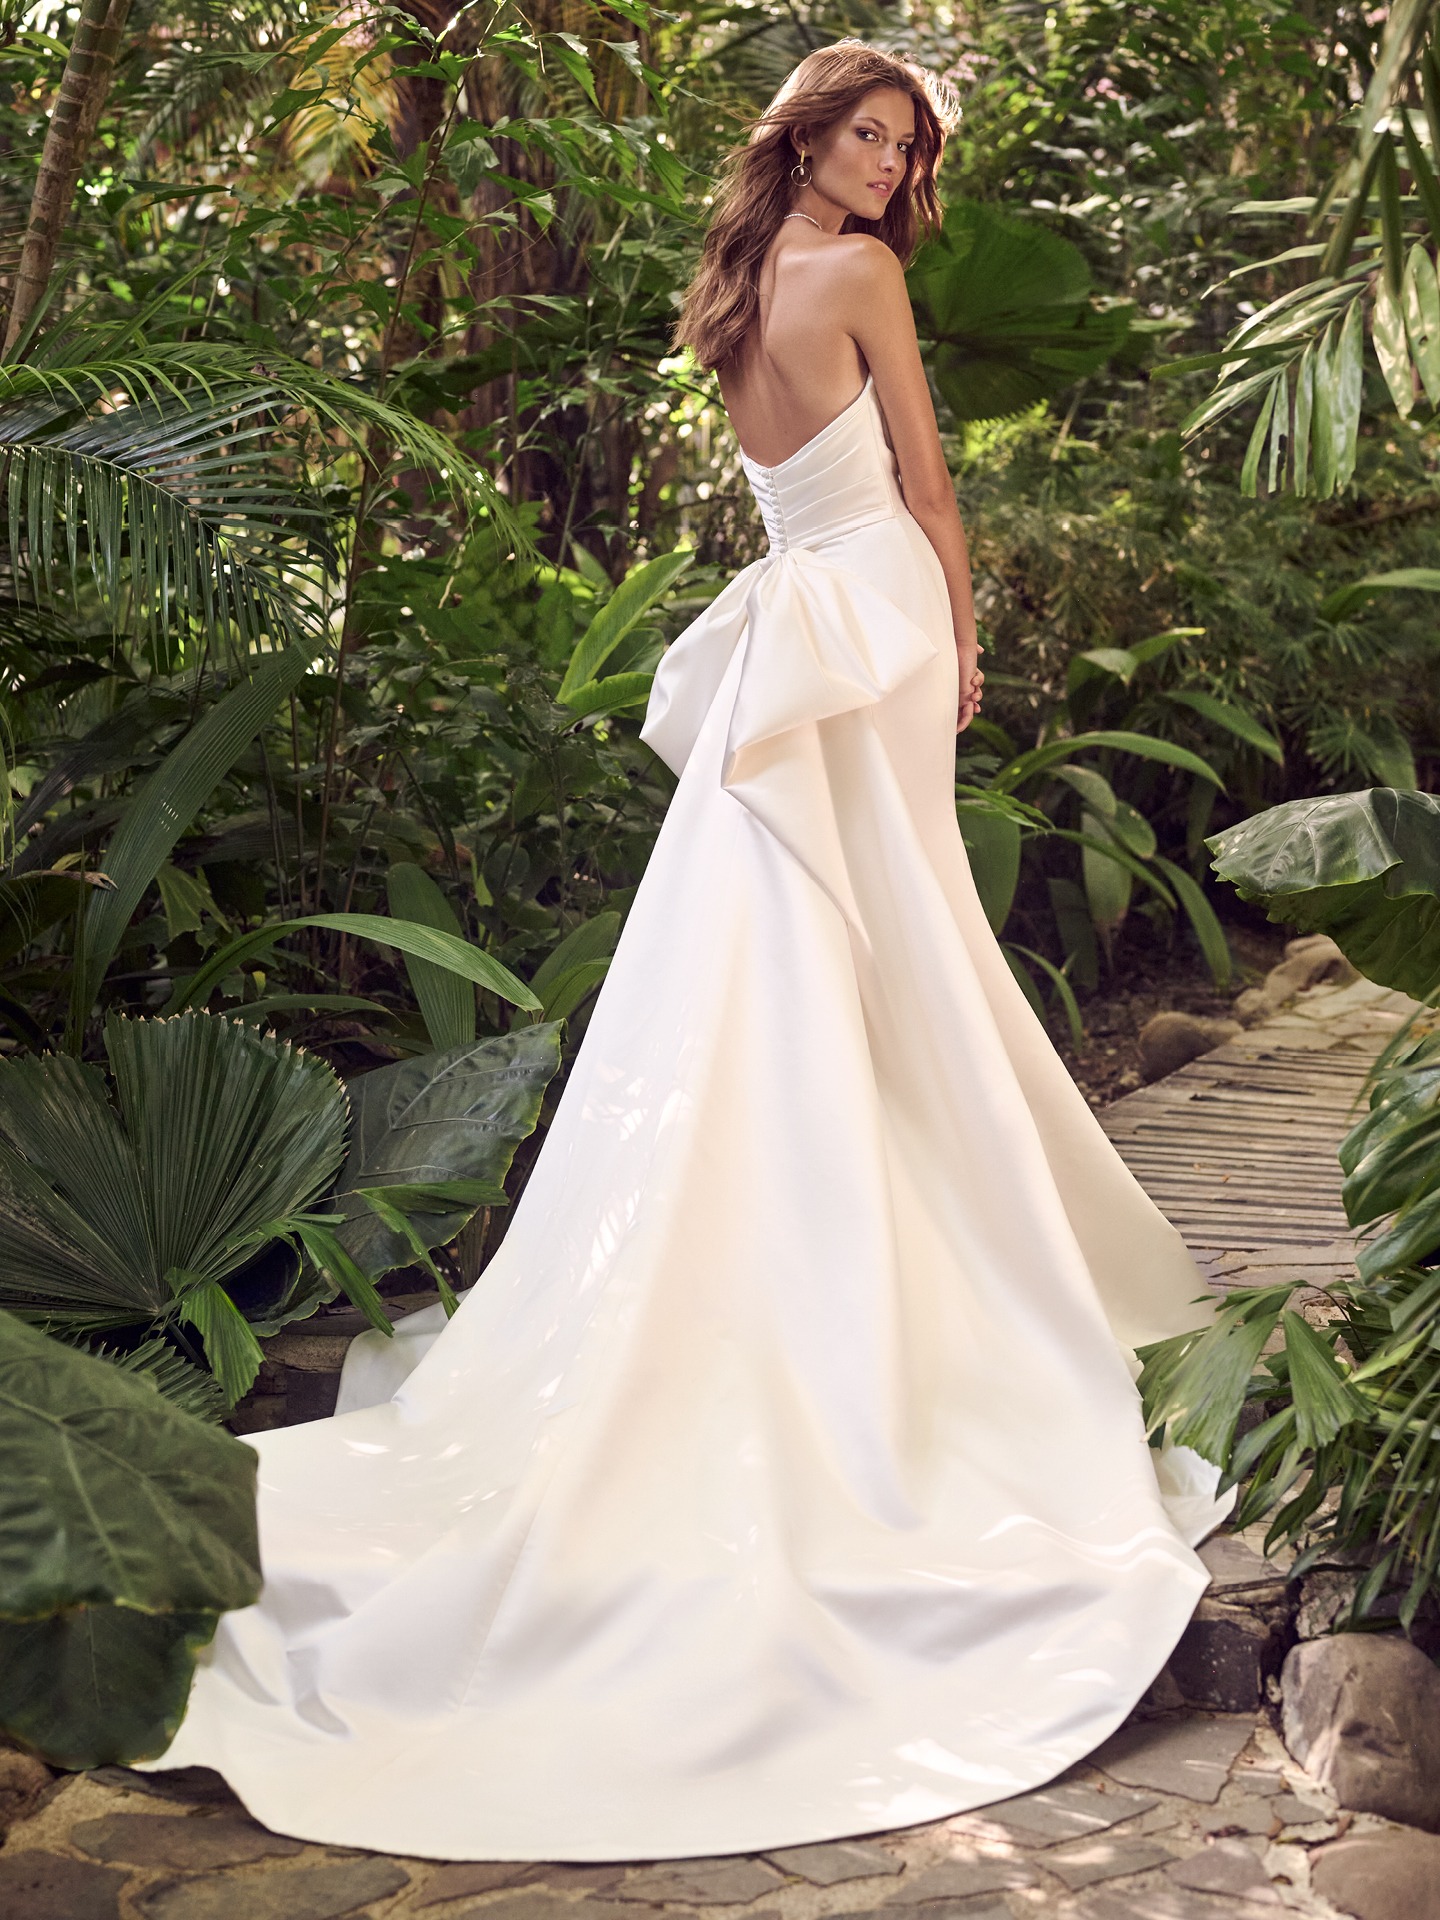 Meadow by Calla Blanche Bridal | Buy Online Simple Elegant Wedding and Bridal  Dresses Australia - Fashionably Yours Wedding Store Sydney